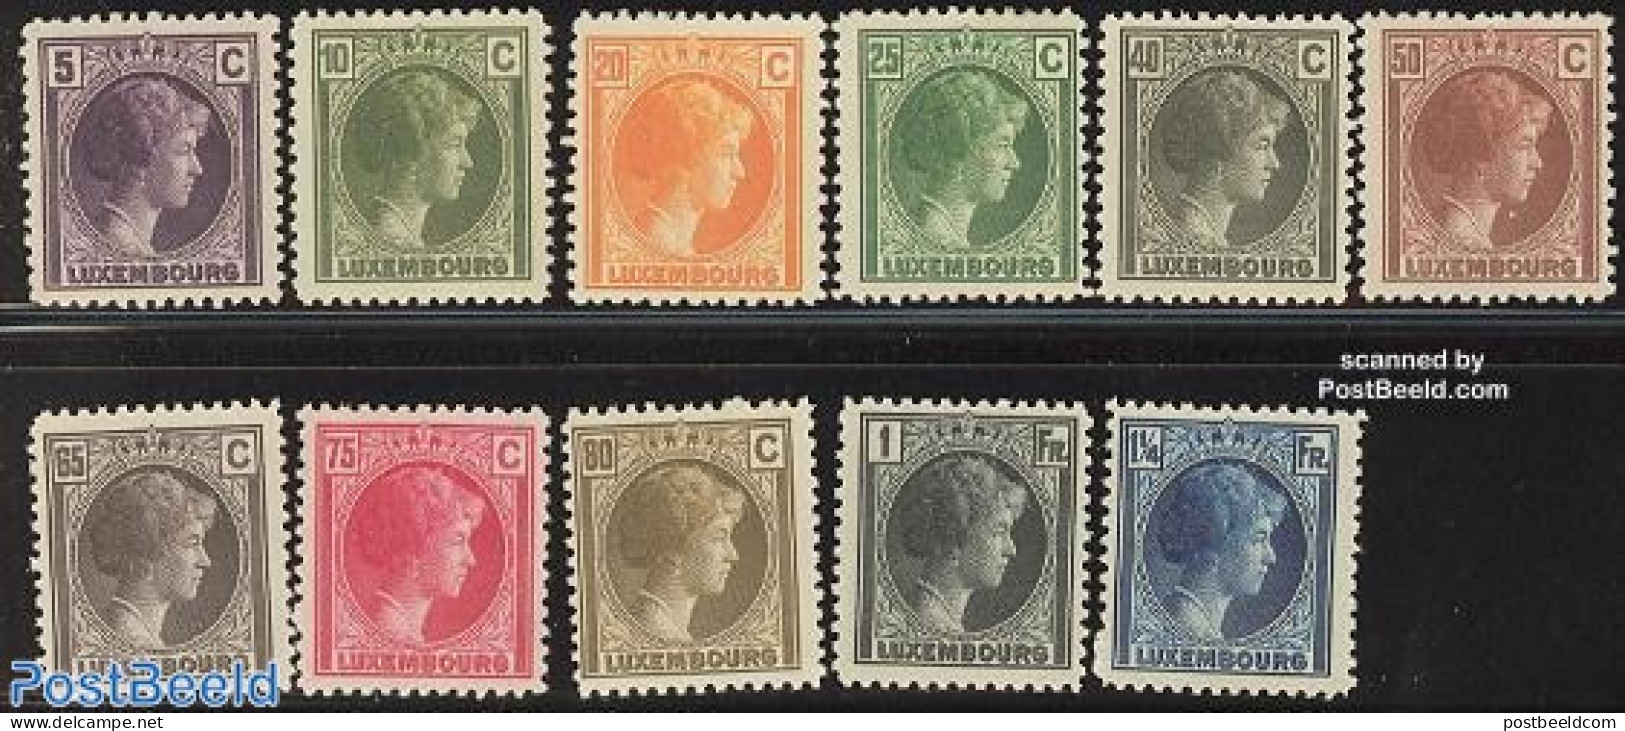 Luxemburg 1926 Definitives 11v, Mint NH - Unused Stamps